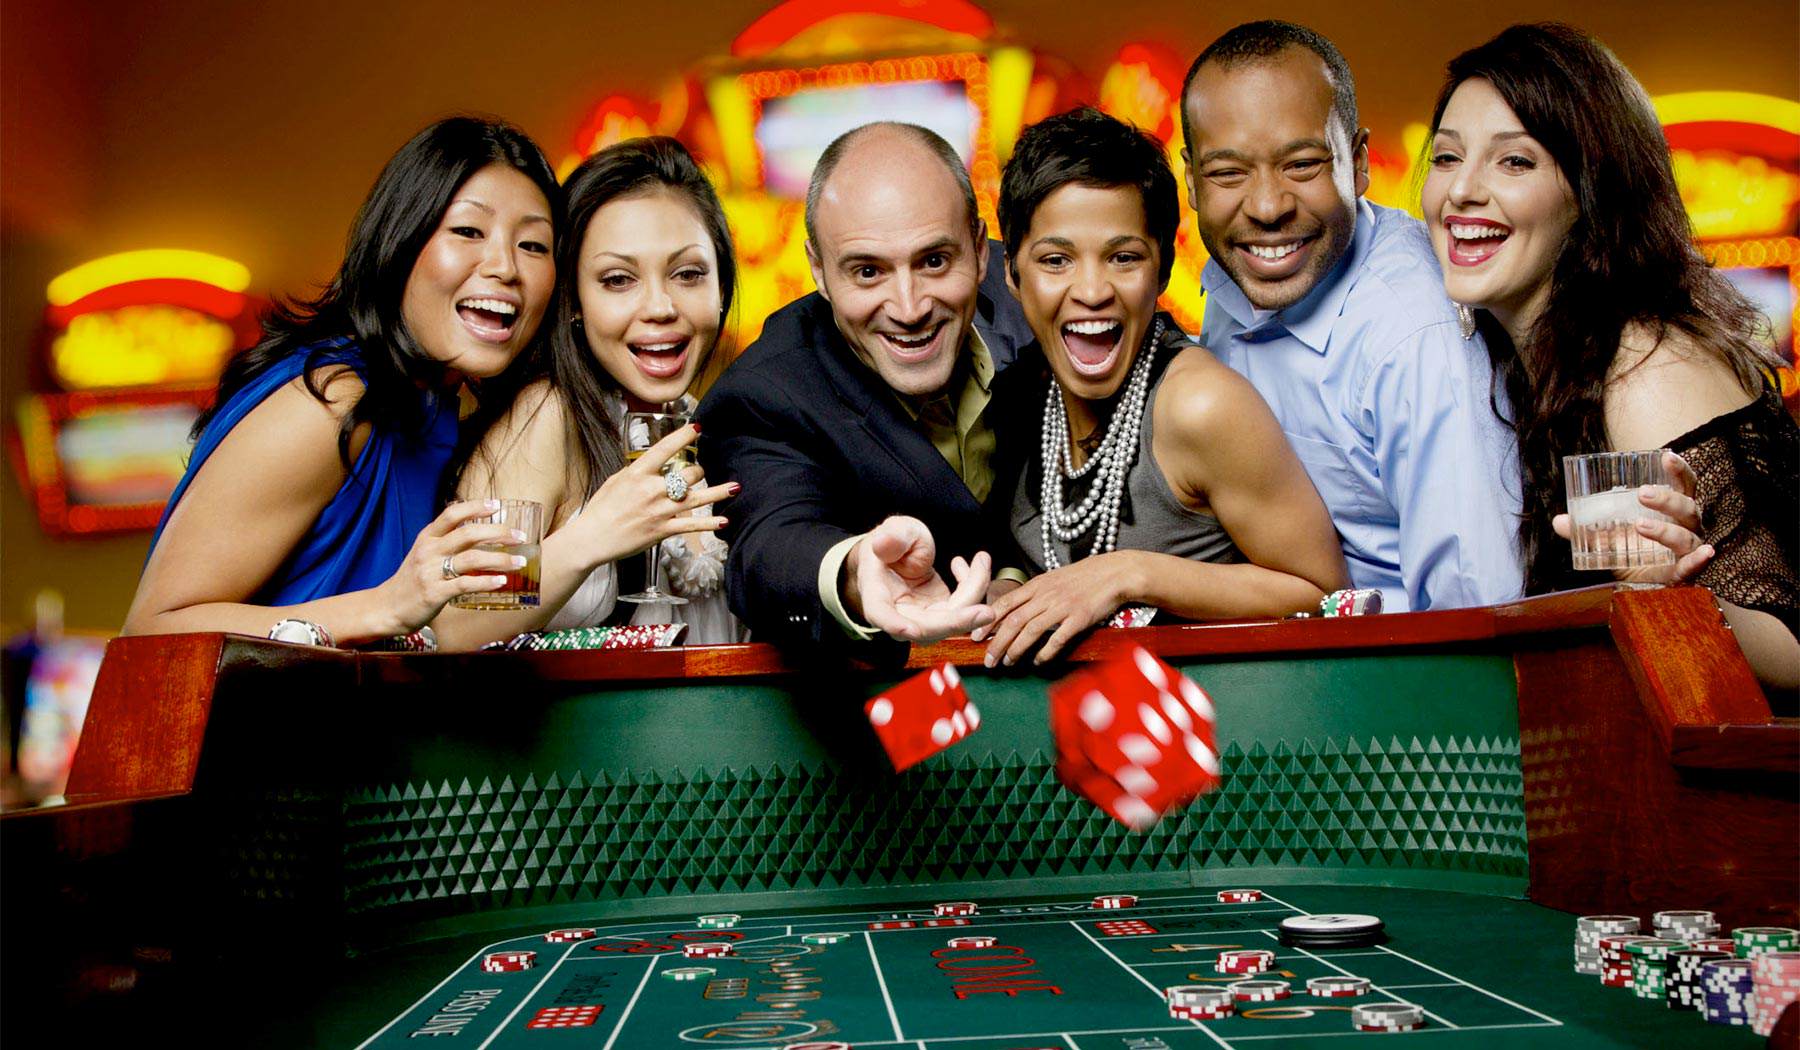 Images of people enjoying gambling at Clearwater Casino